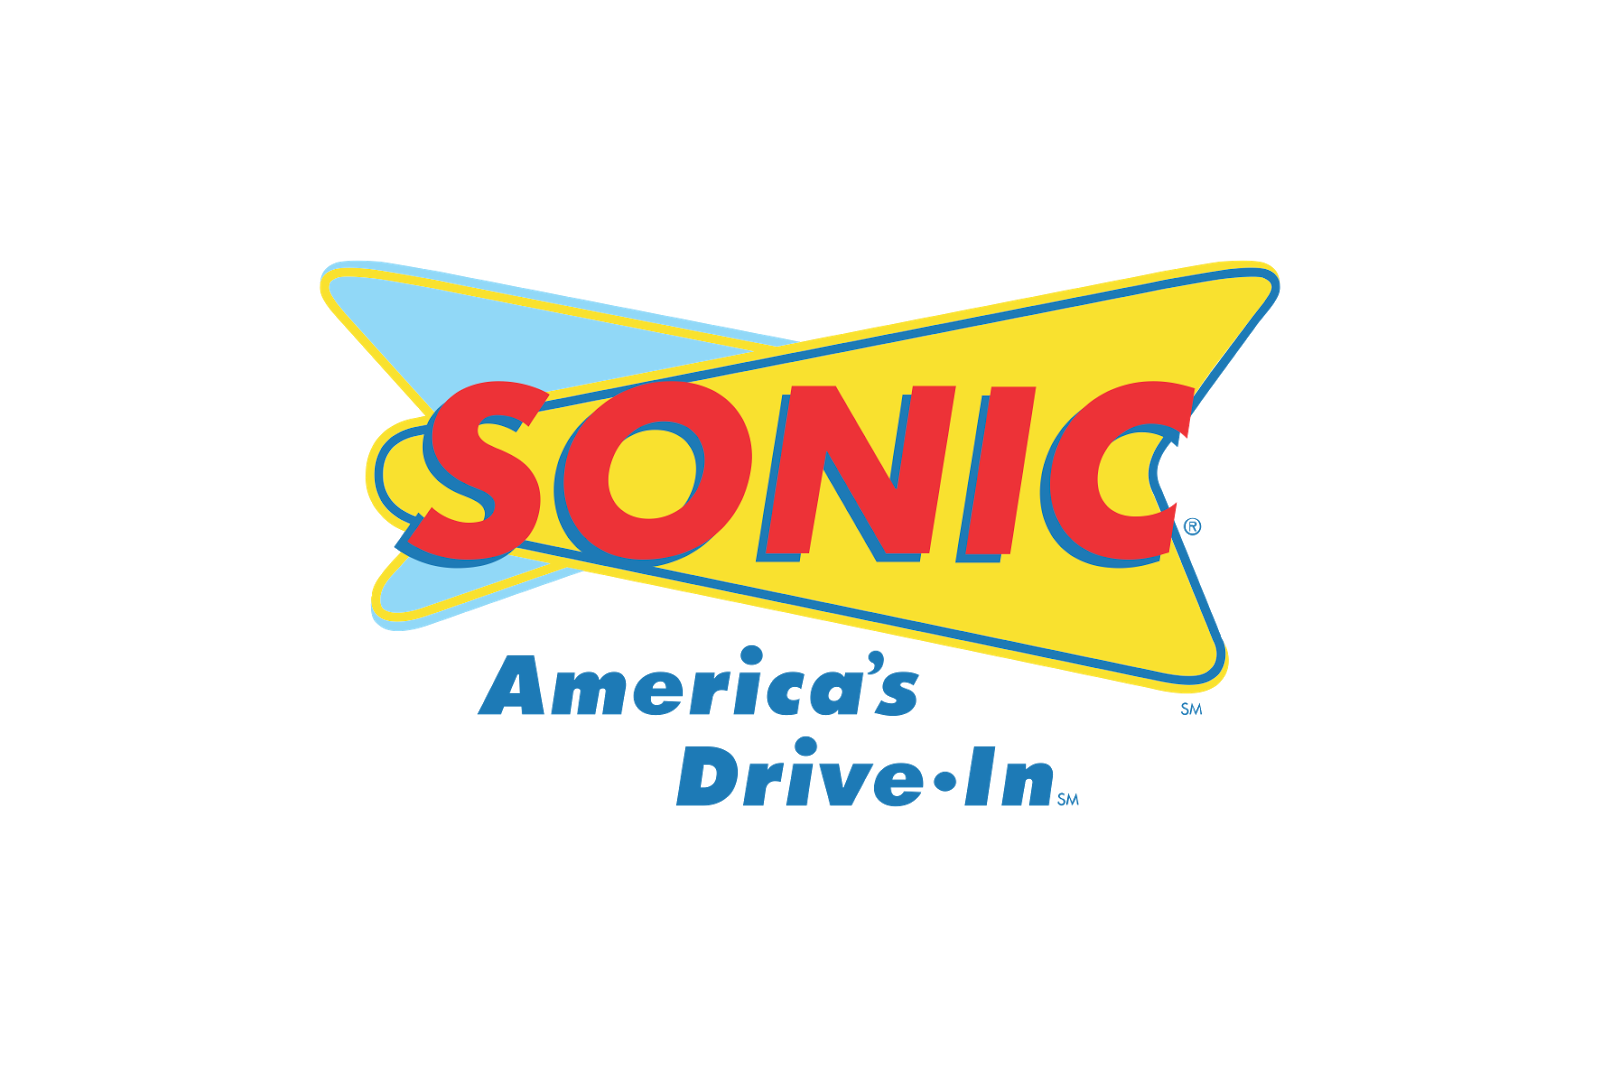 Sonic Drive-in. Sonic Drive-in logo. Sonic America's Drive-in лого. Трой Смит Sonic Drive-in. Соник драйв